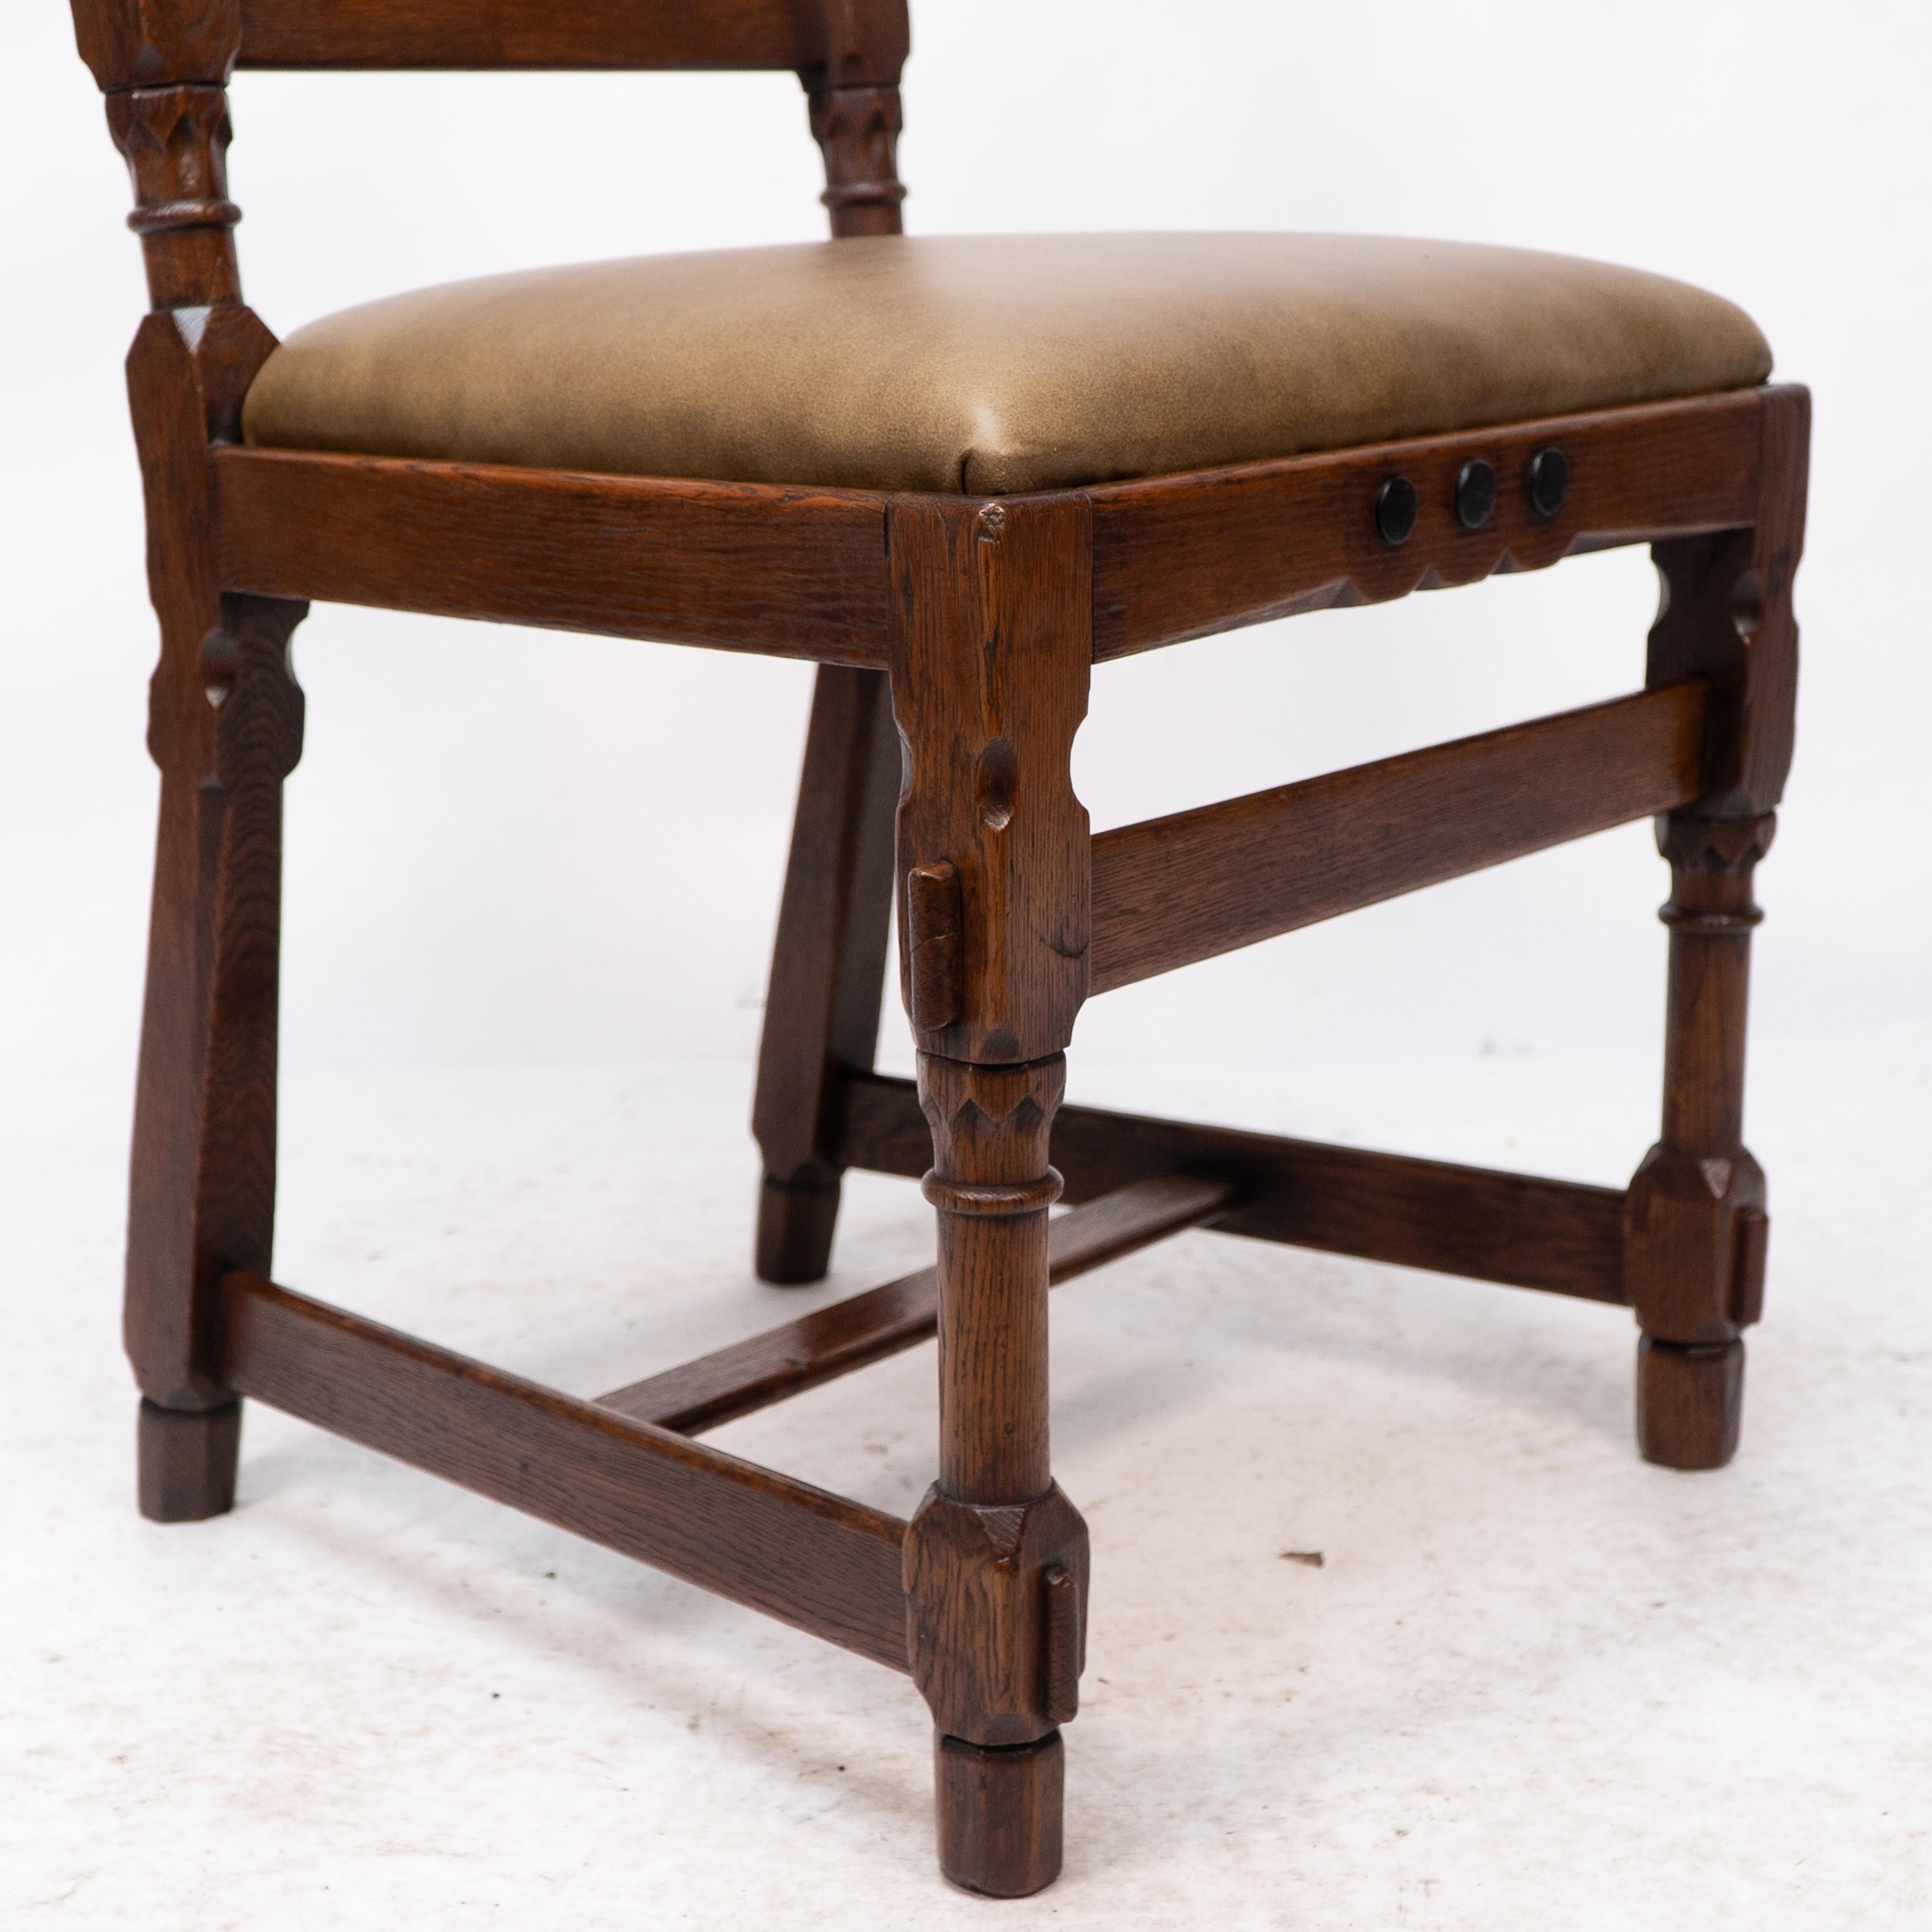 J P Seddon attri. An Aesthetic Movement oak side chair with ebonized circles For Sale 4